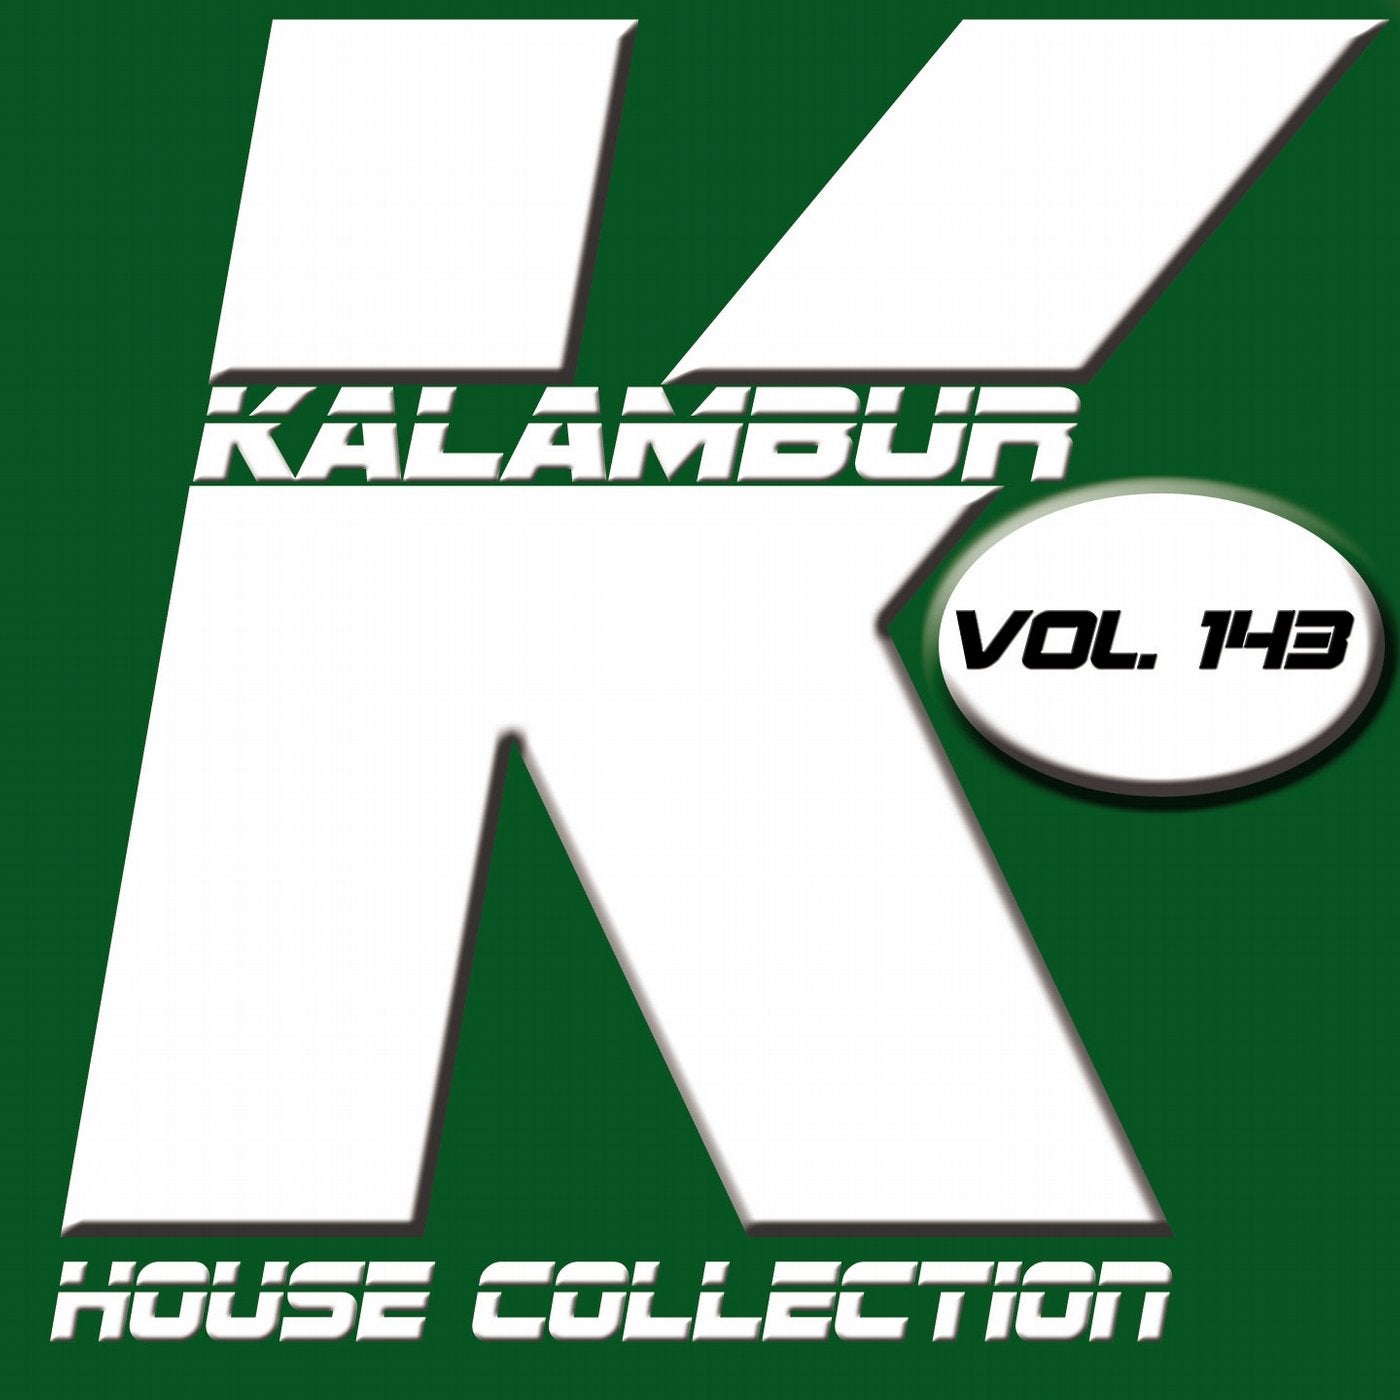 KALAMBUR HOUSE COLLECTION VOL 143